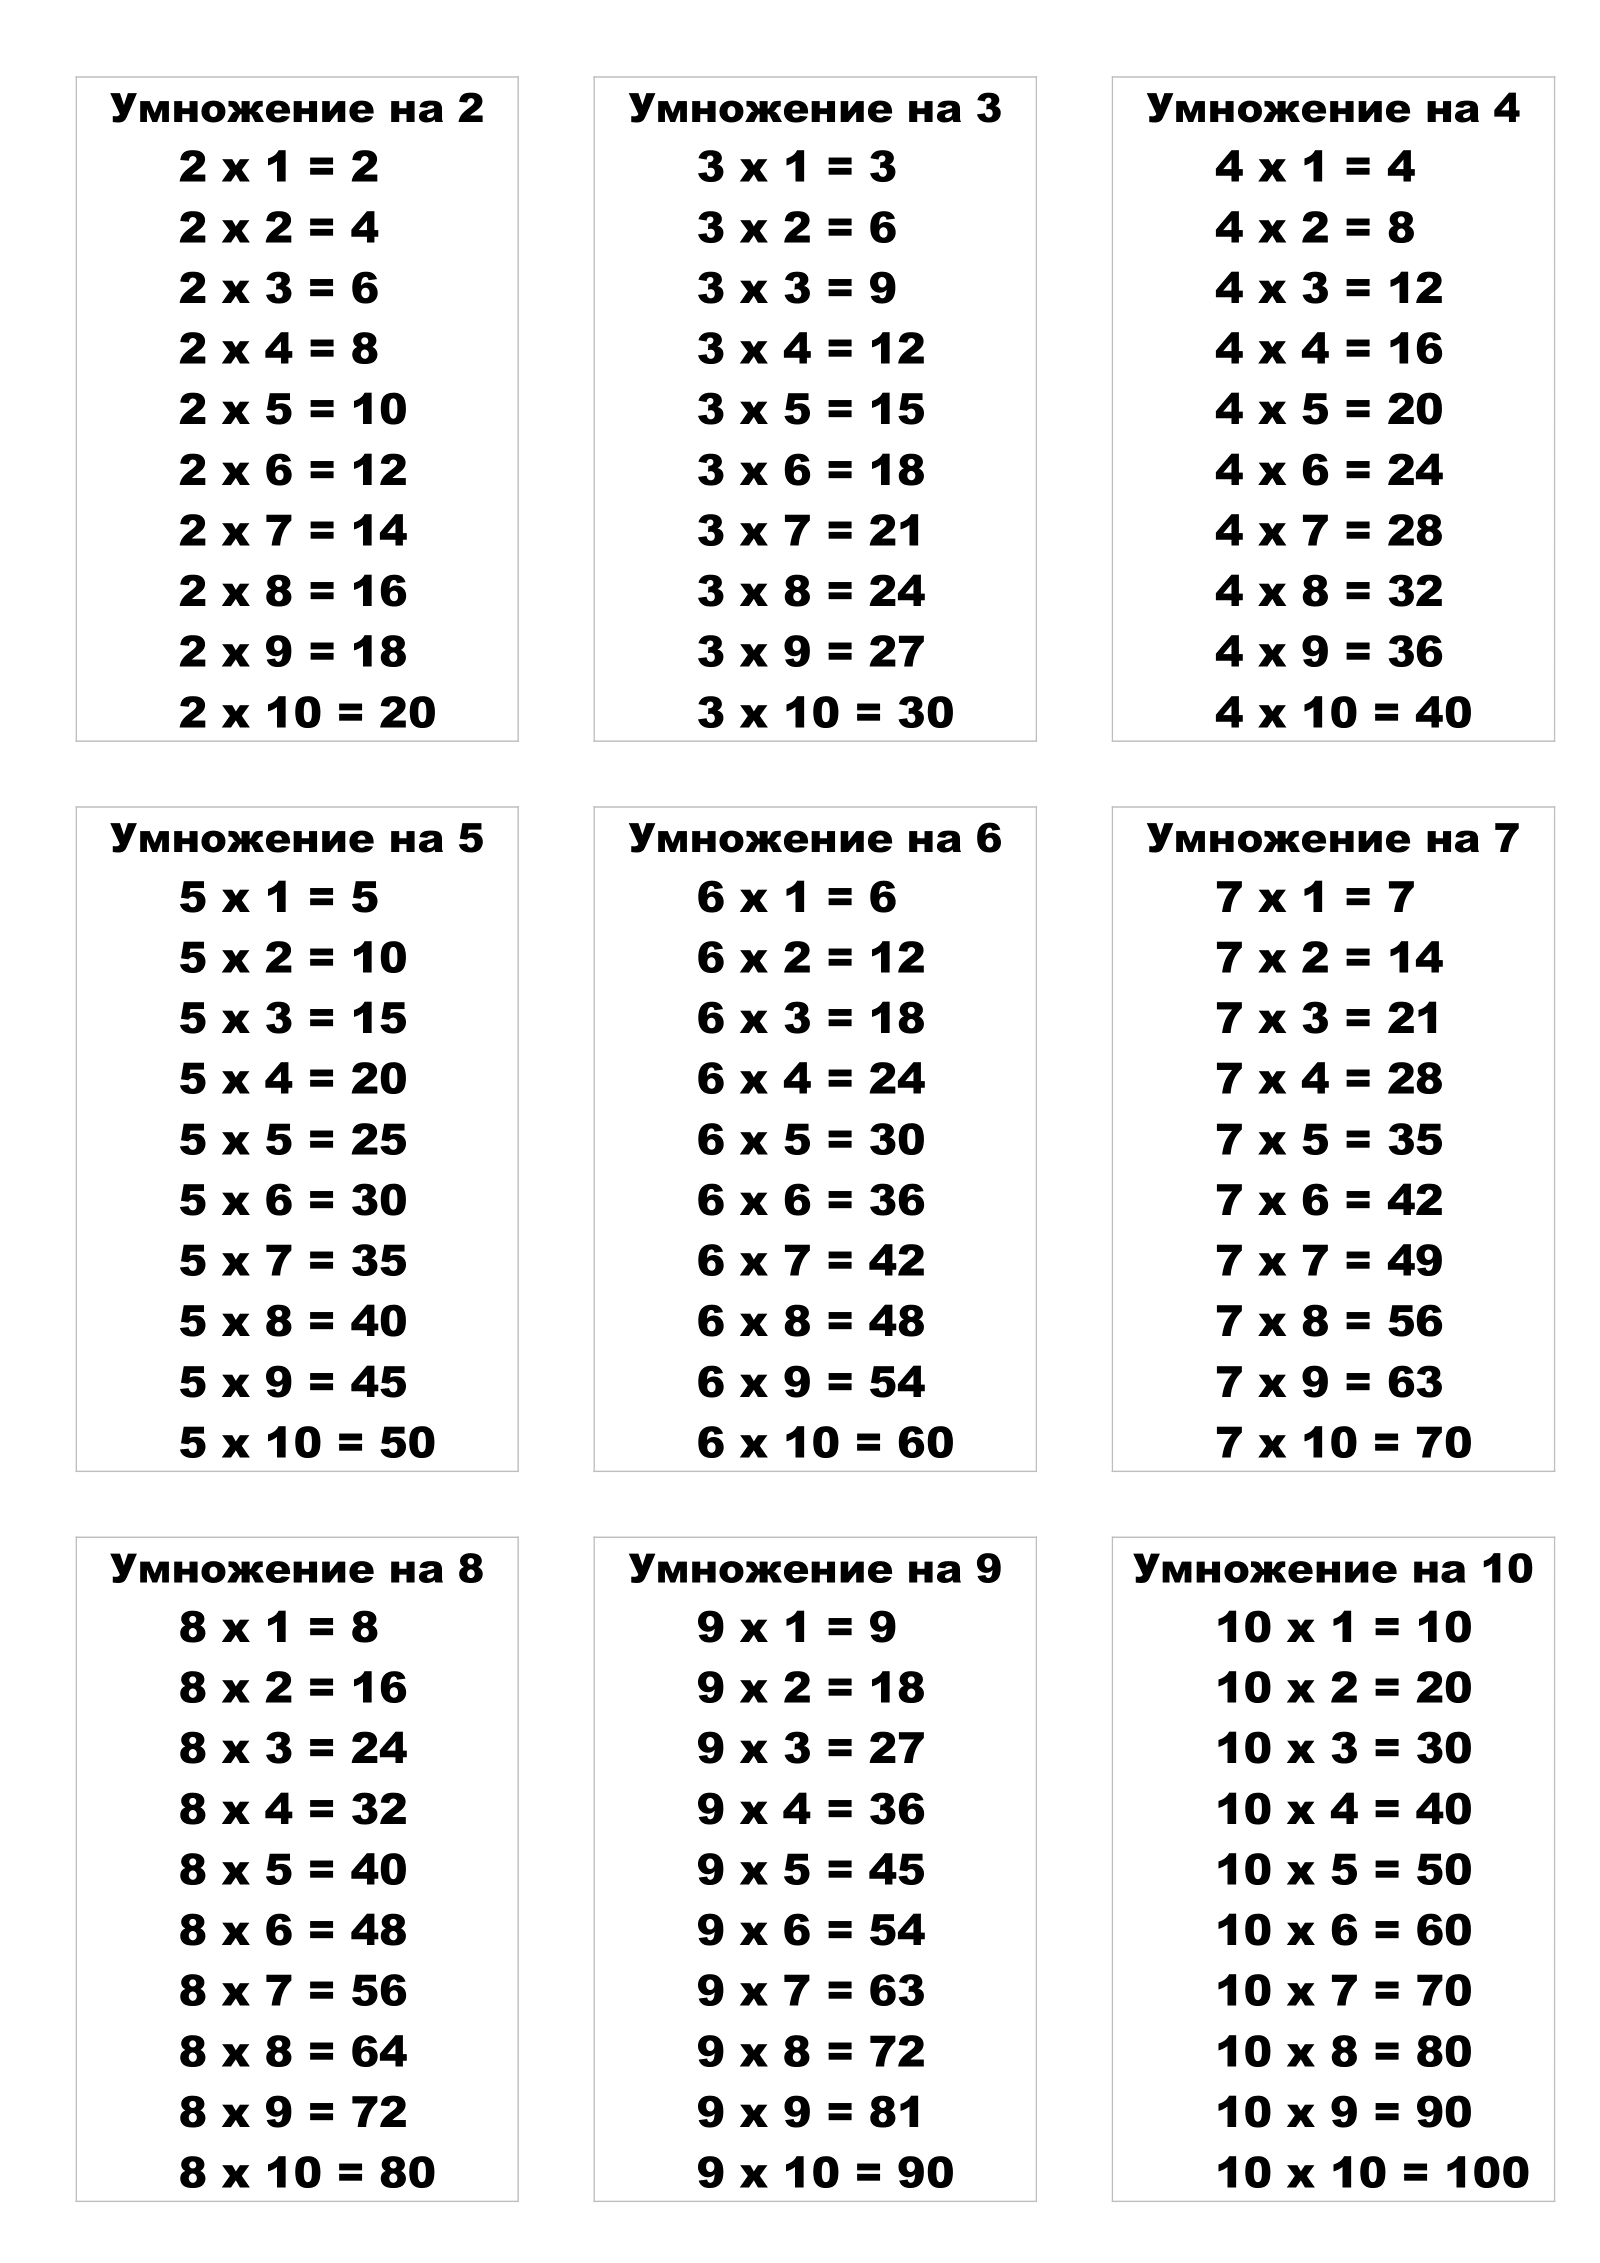 Multiplication Table. Print